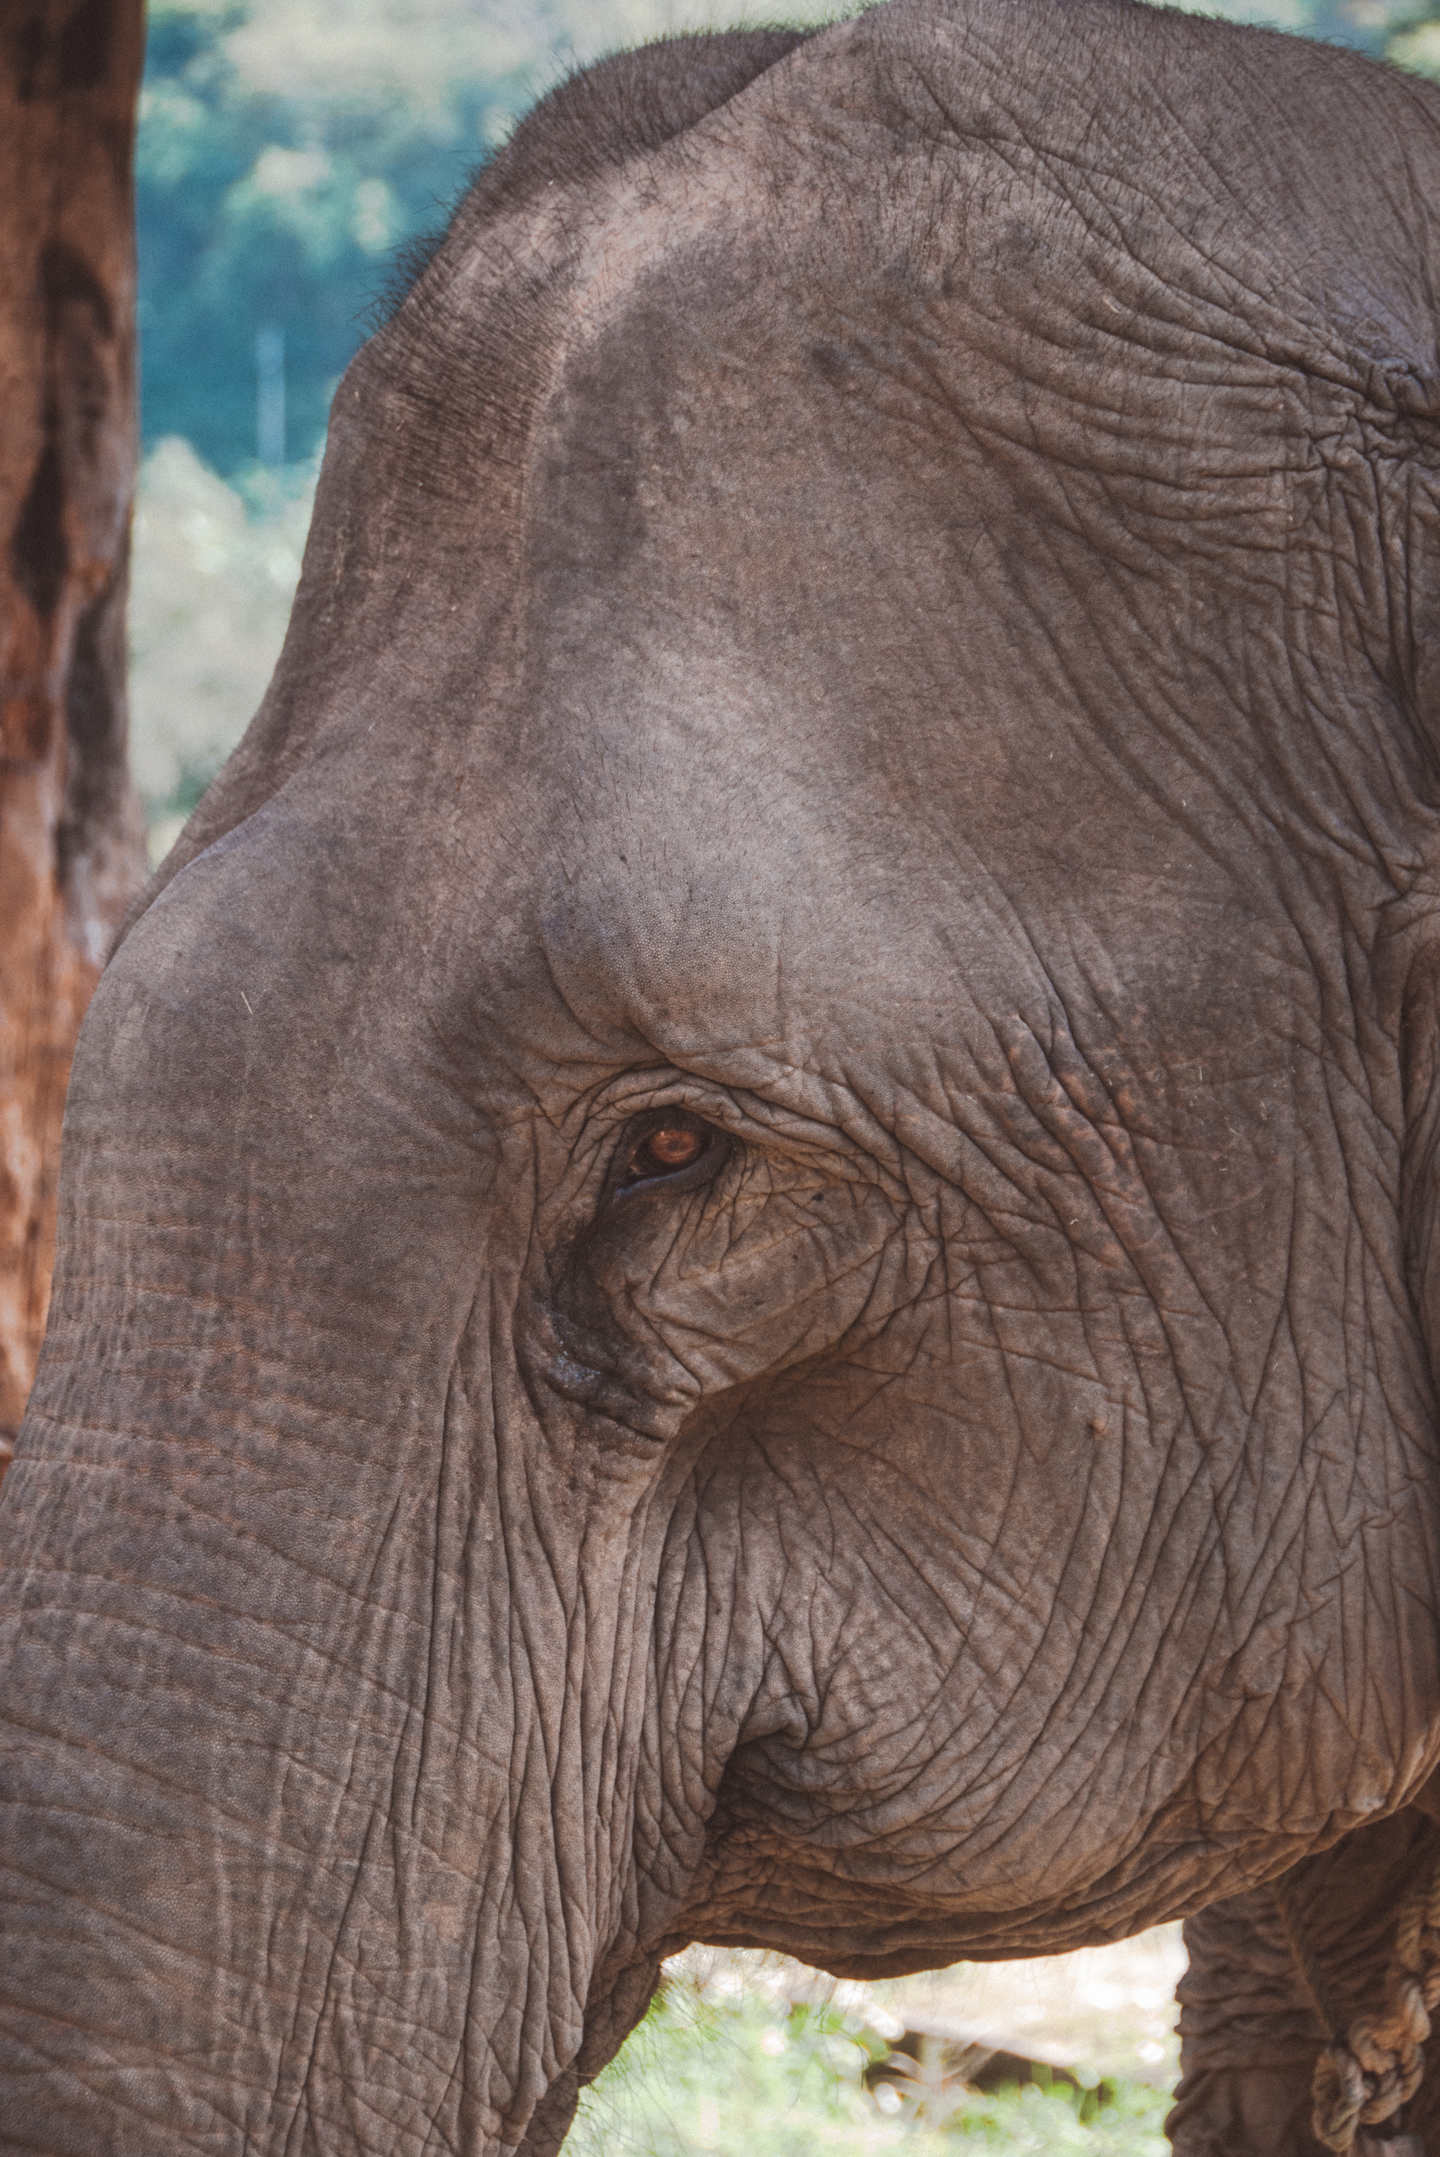 Chiang Rai Thailand elephant sanctuary